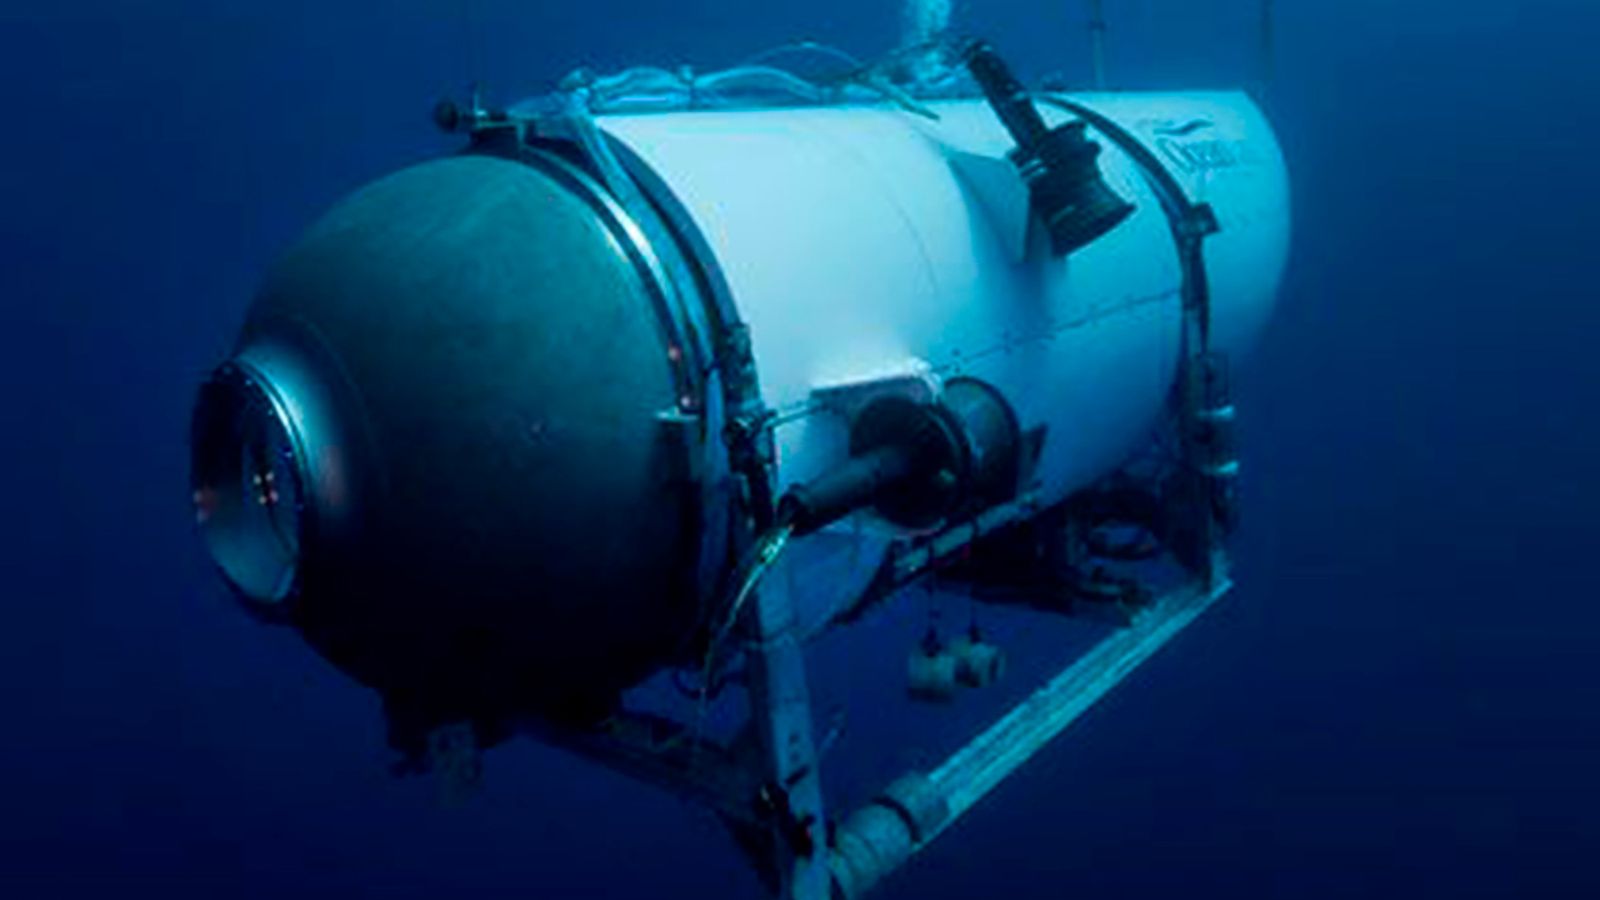 titan submersible